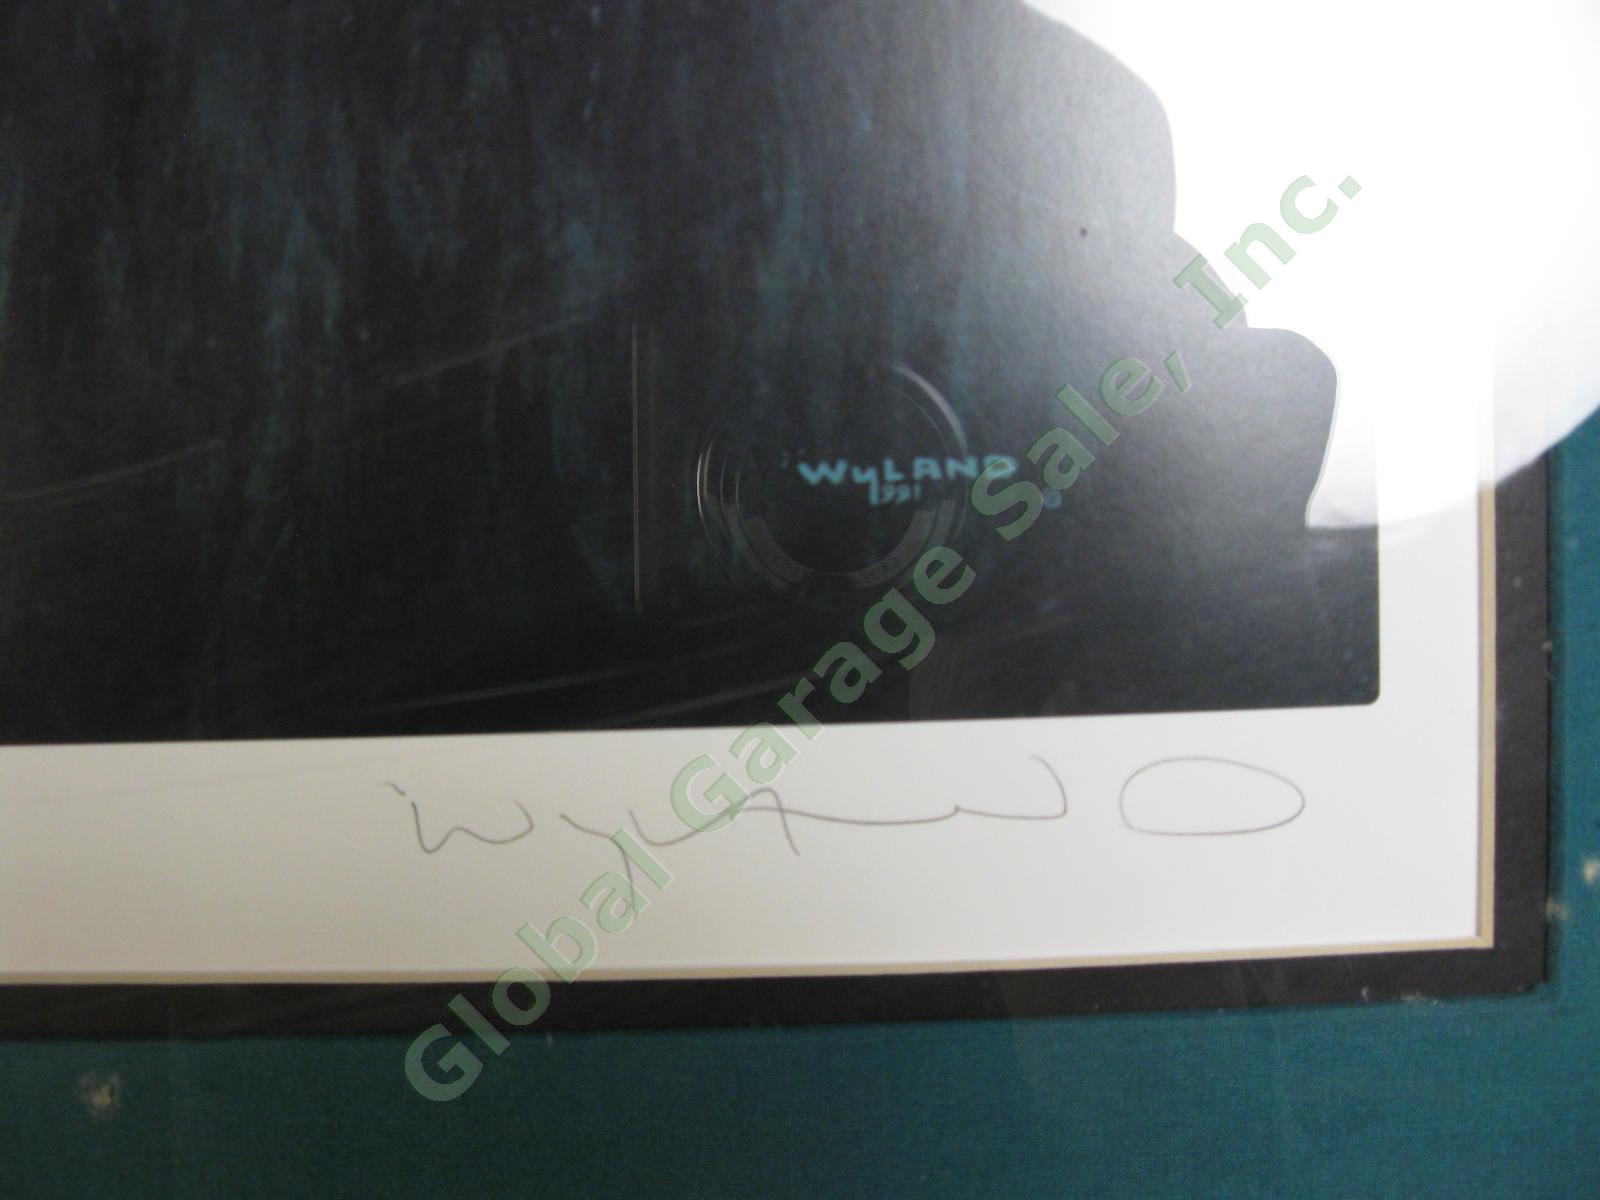 Endangered Manatees Robert Wyland Original SIGNED Limited Edition Print PP 38/65 4